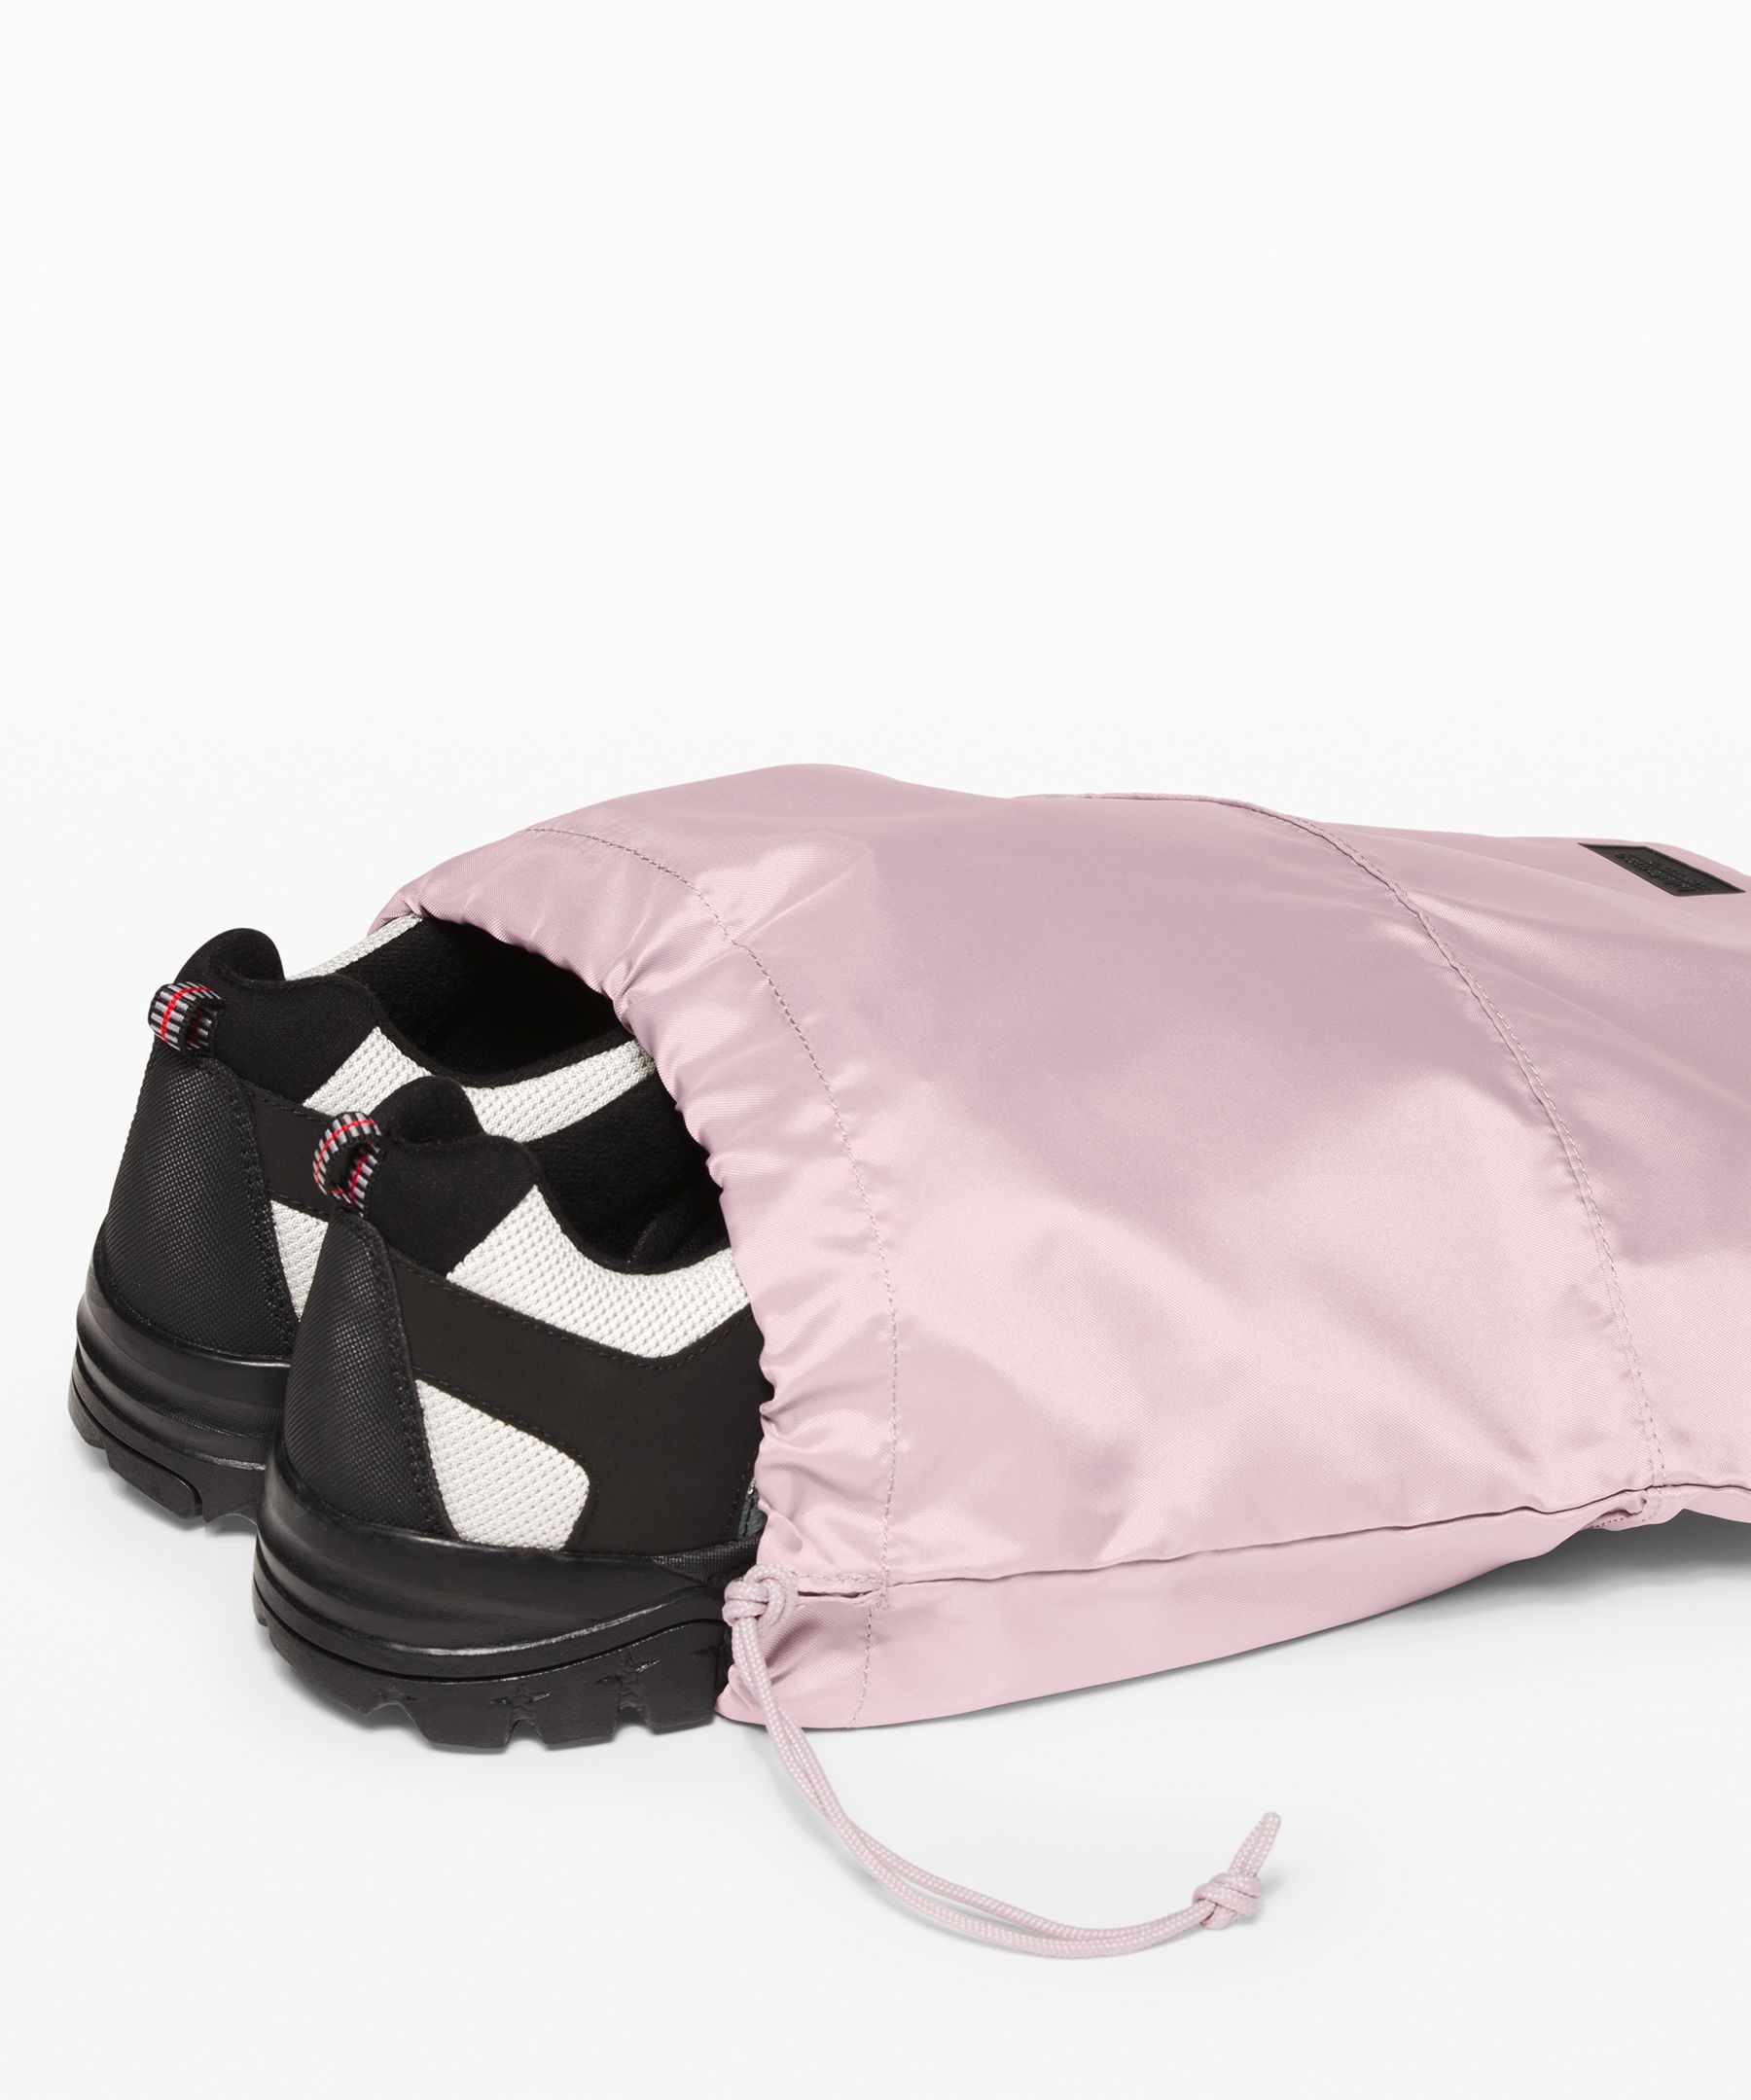 lululemon shoe bag